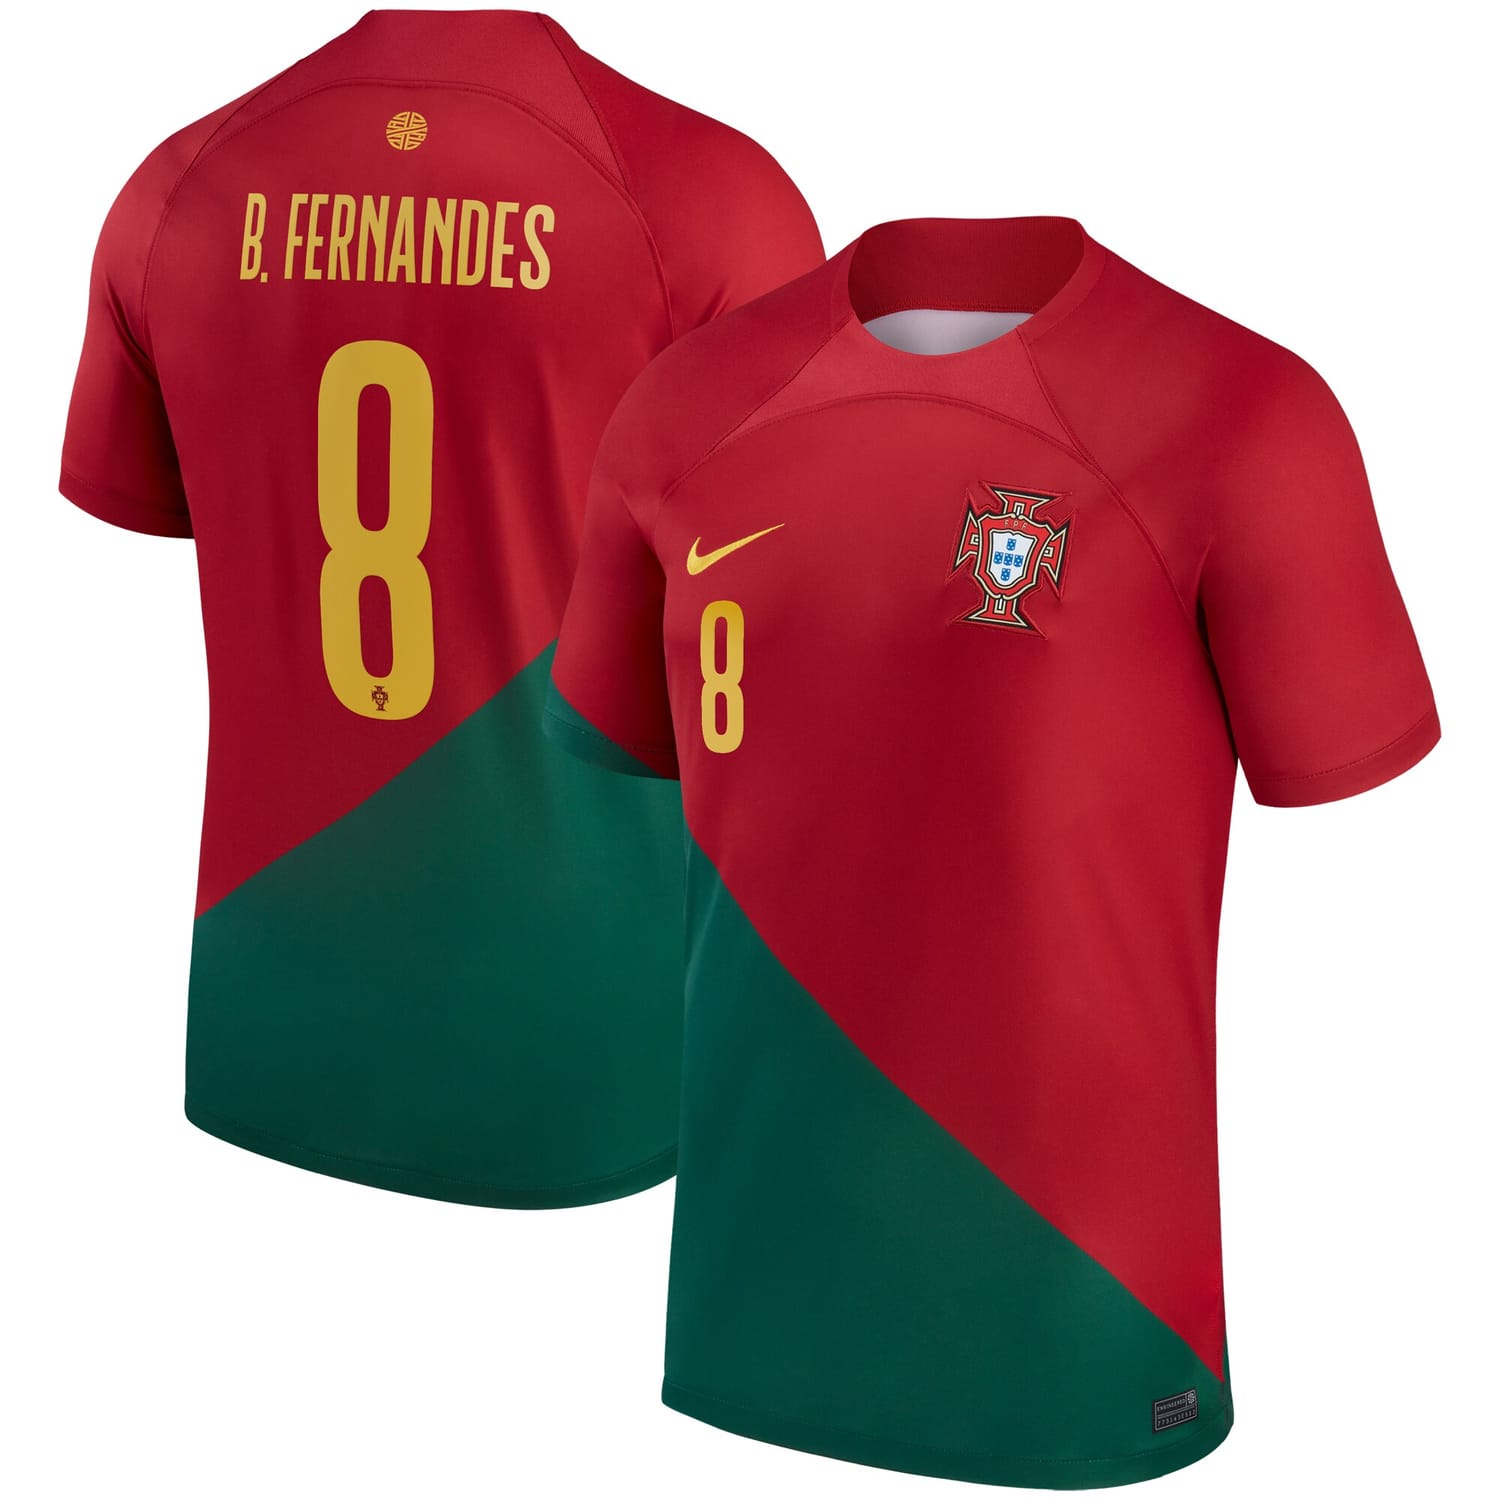 Portugal National Team Home Jersey Shirt Red 2022-23 player Bruno Fernandes printing for Men